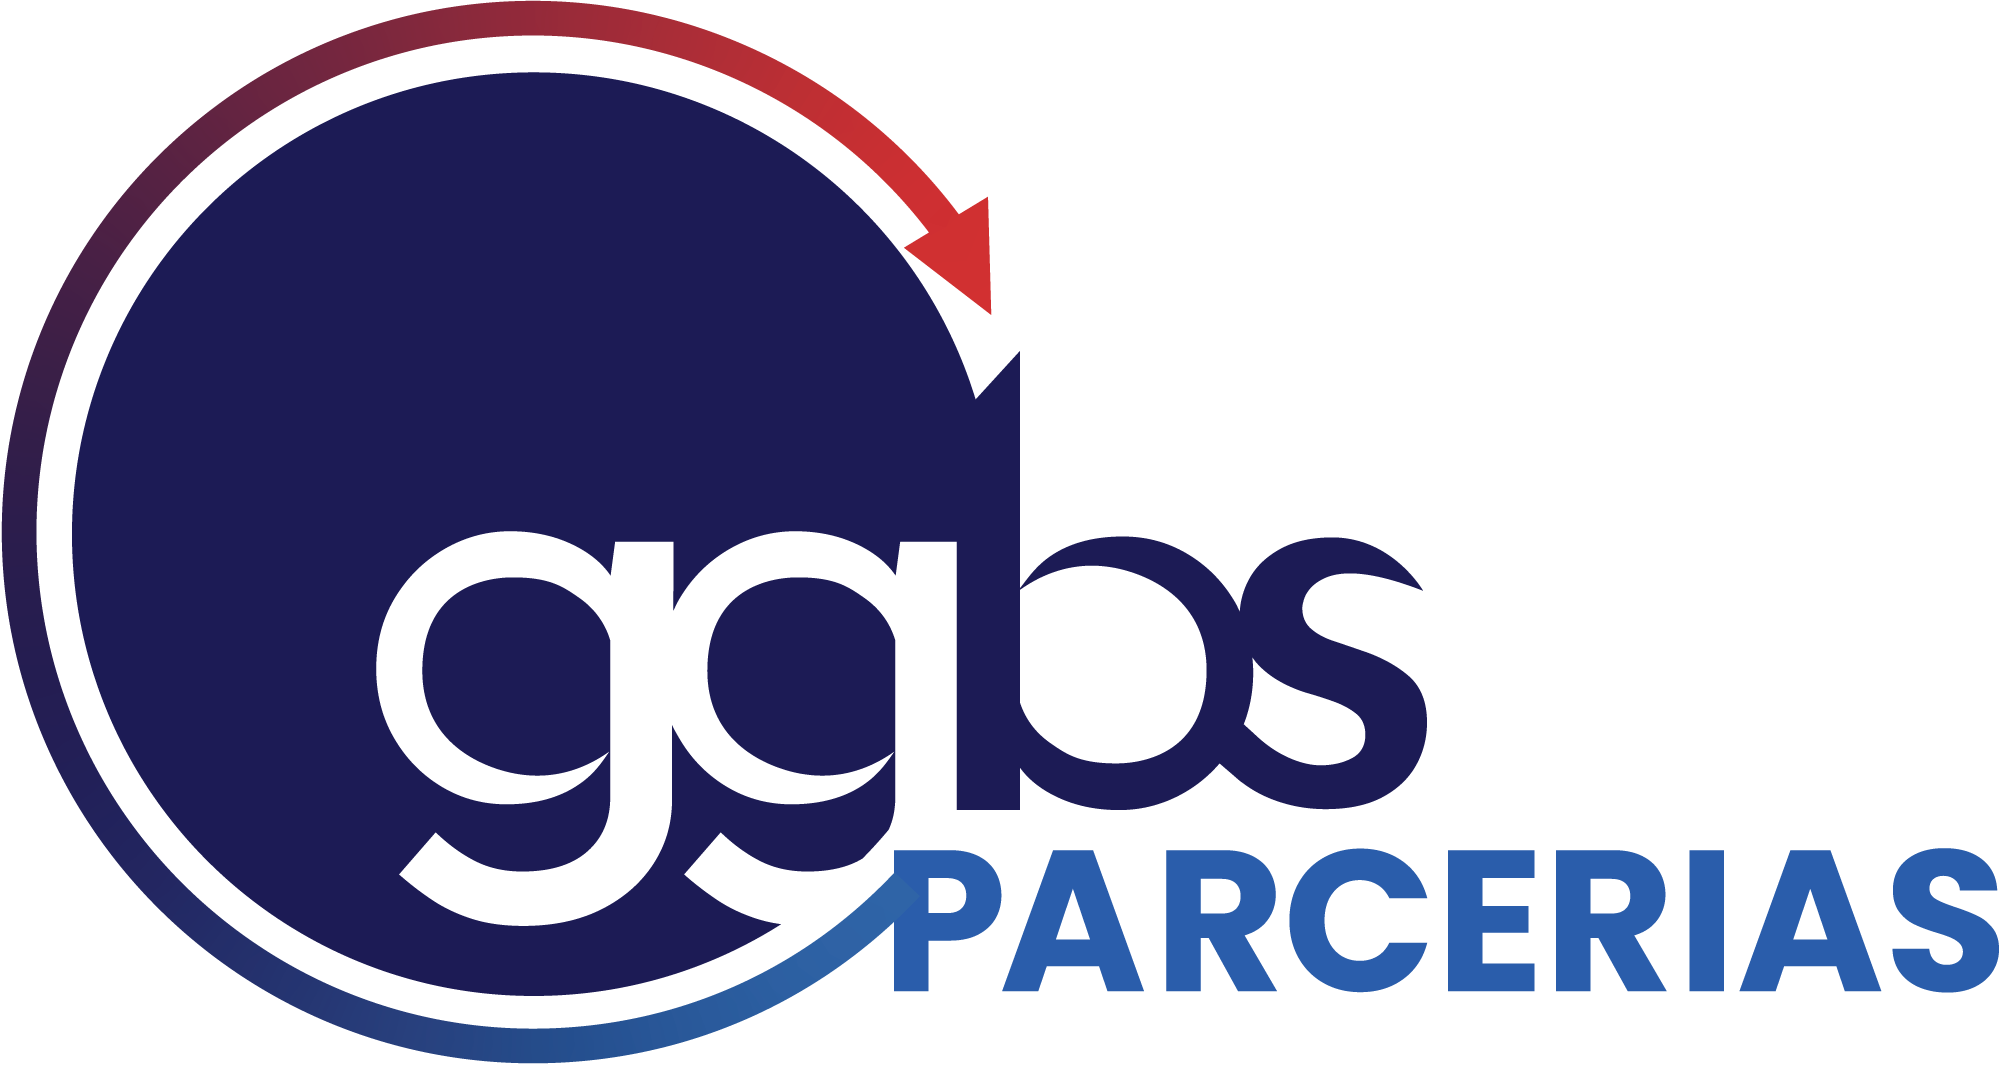 GGBS Parcerias